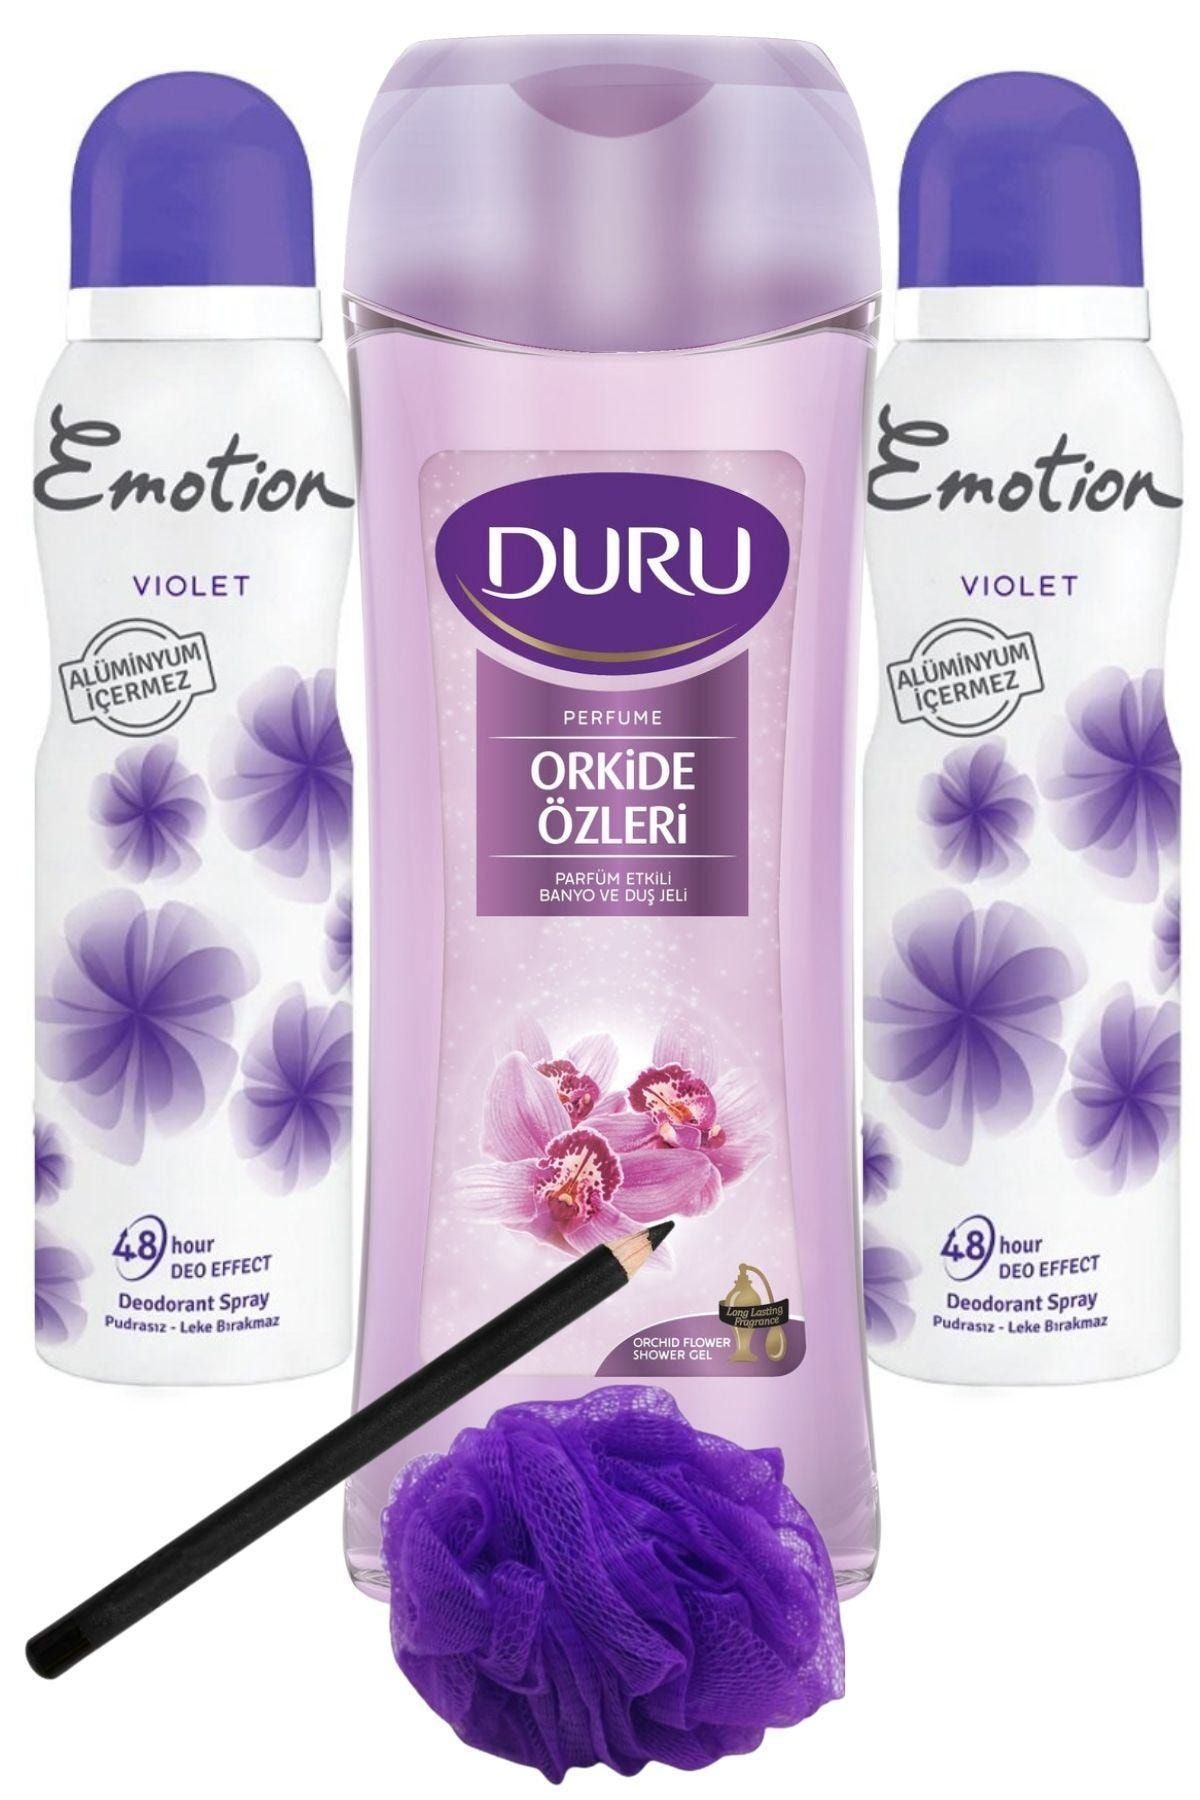 Emotion Violet Kadın Deo 150 ml + Duru Orkide Duş Jeli 450ml/set 5 Parça